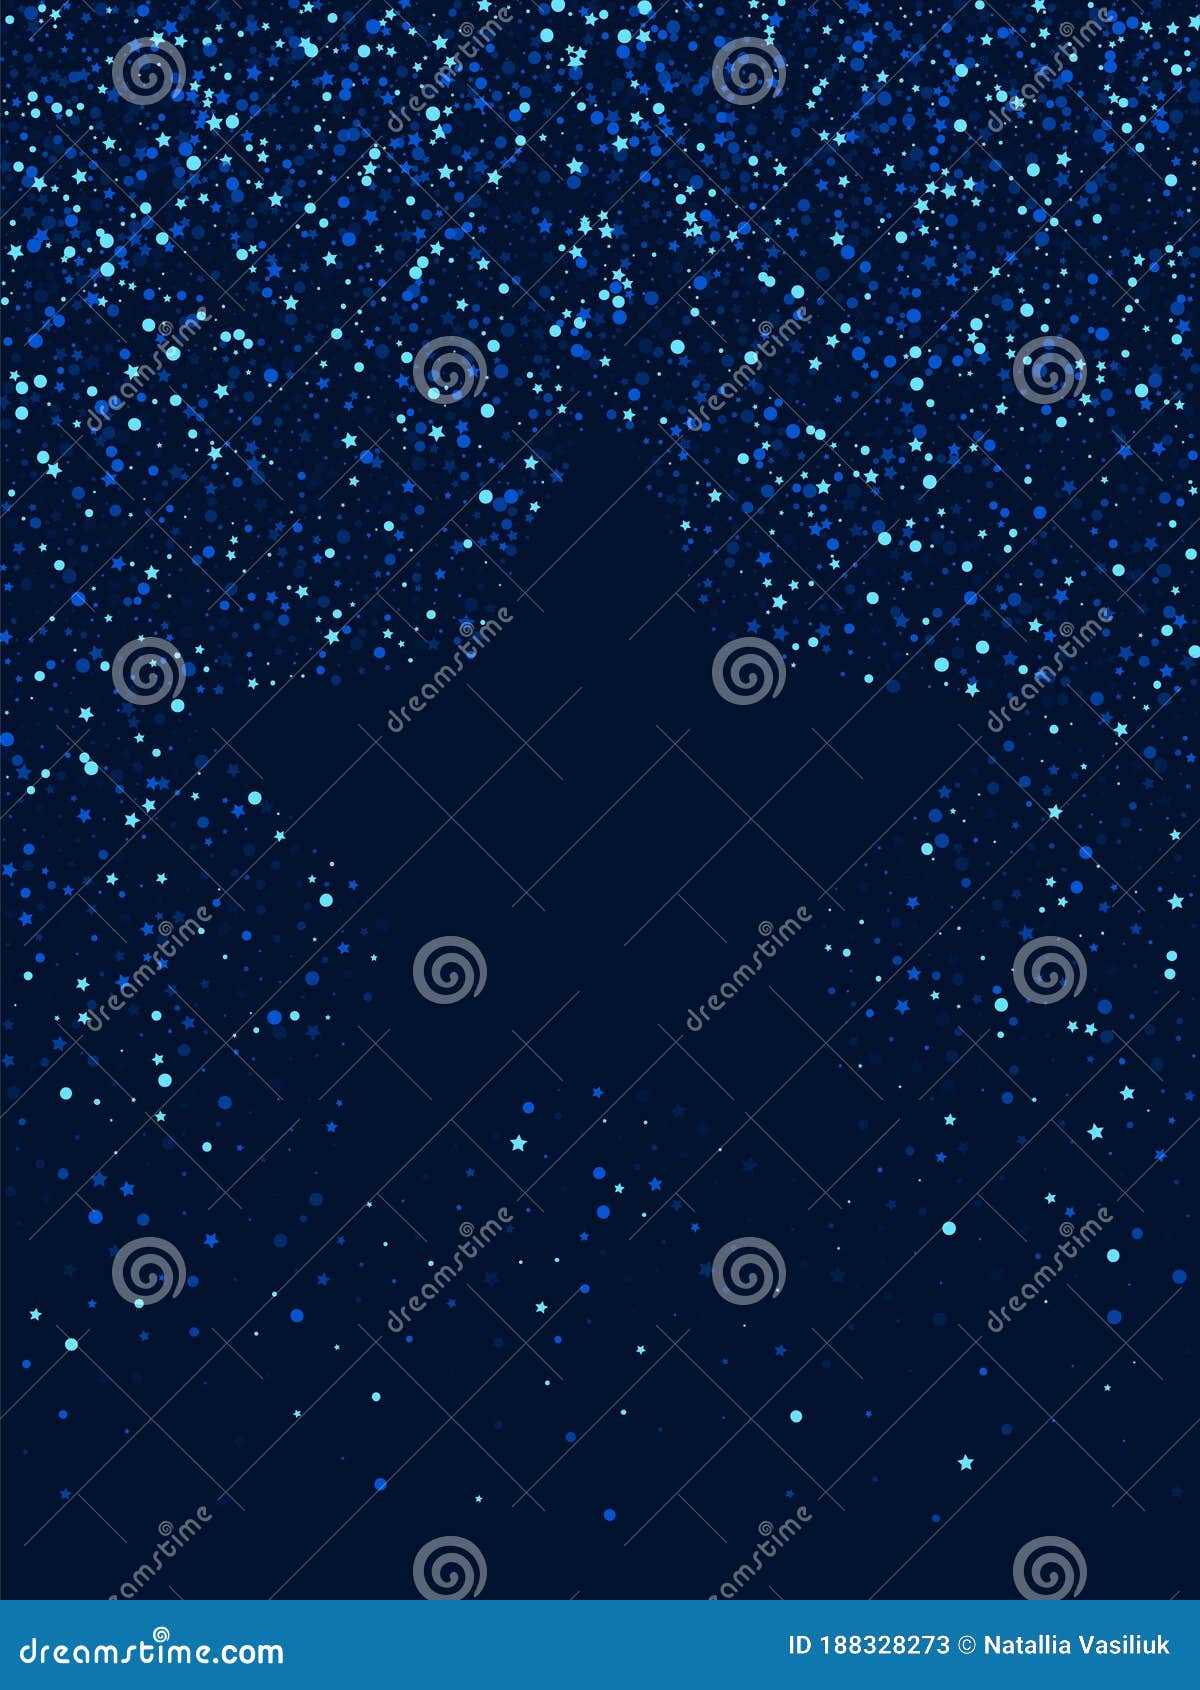 Dark Magic Digital Confetti Texture. Silver Stock Vector - Illustration ...